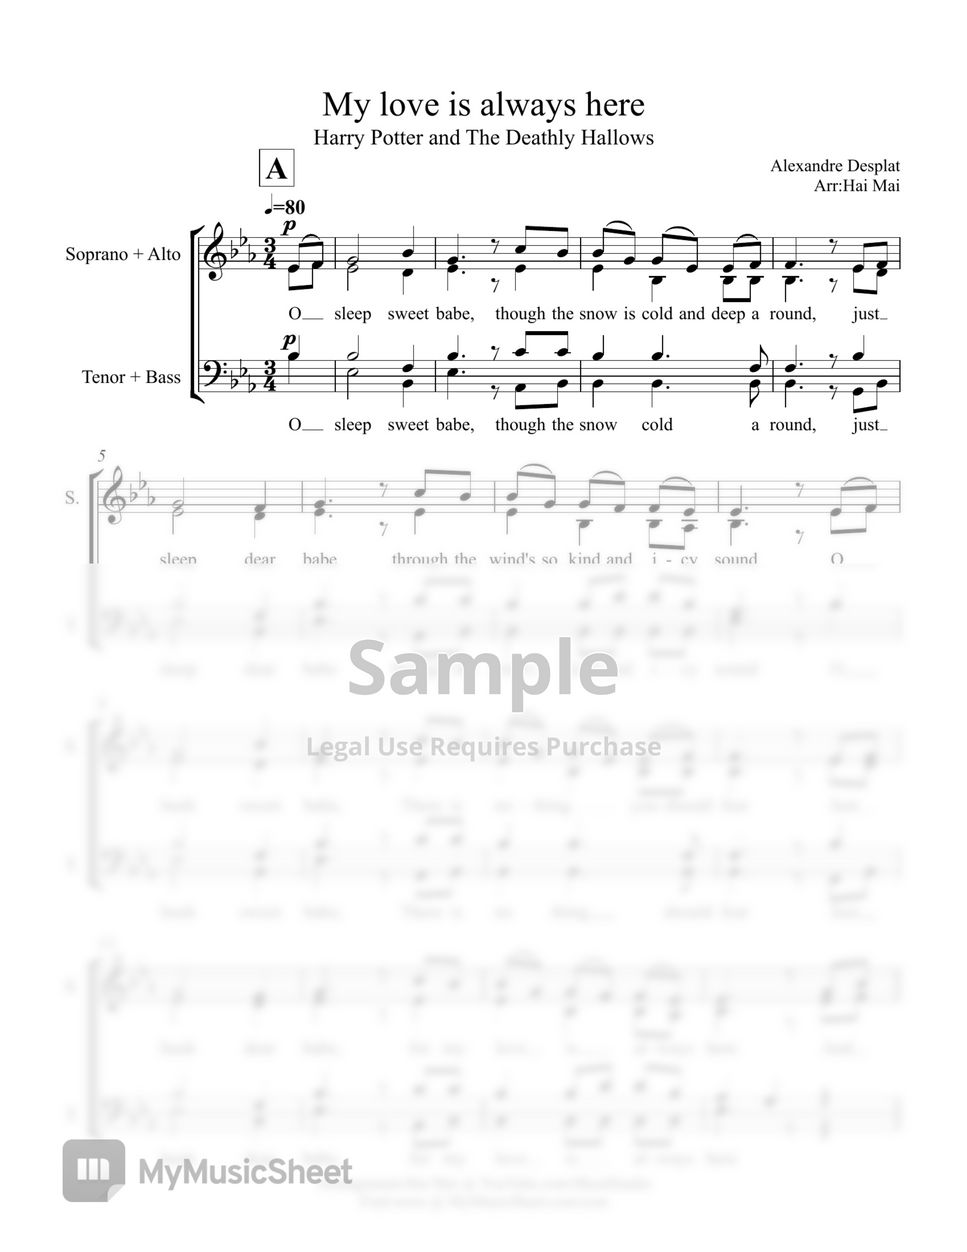 Alexandre Desplat - My Love is Always Here for SATB acapella choir by Hai Mai